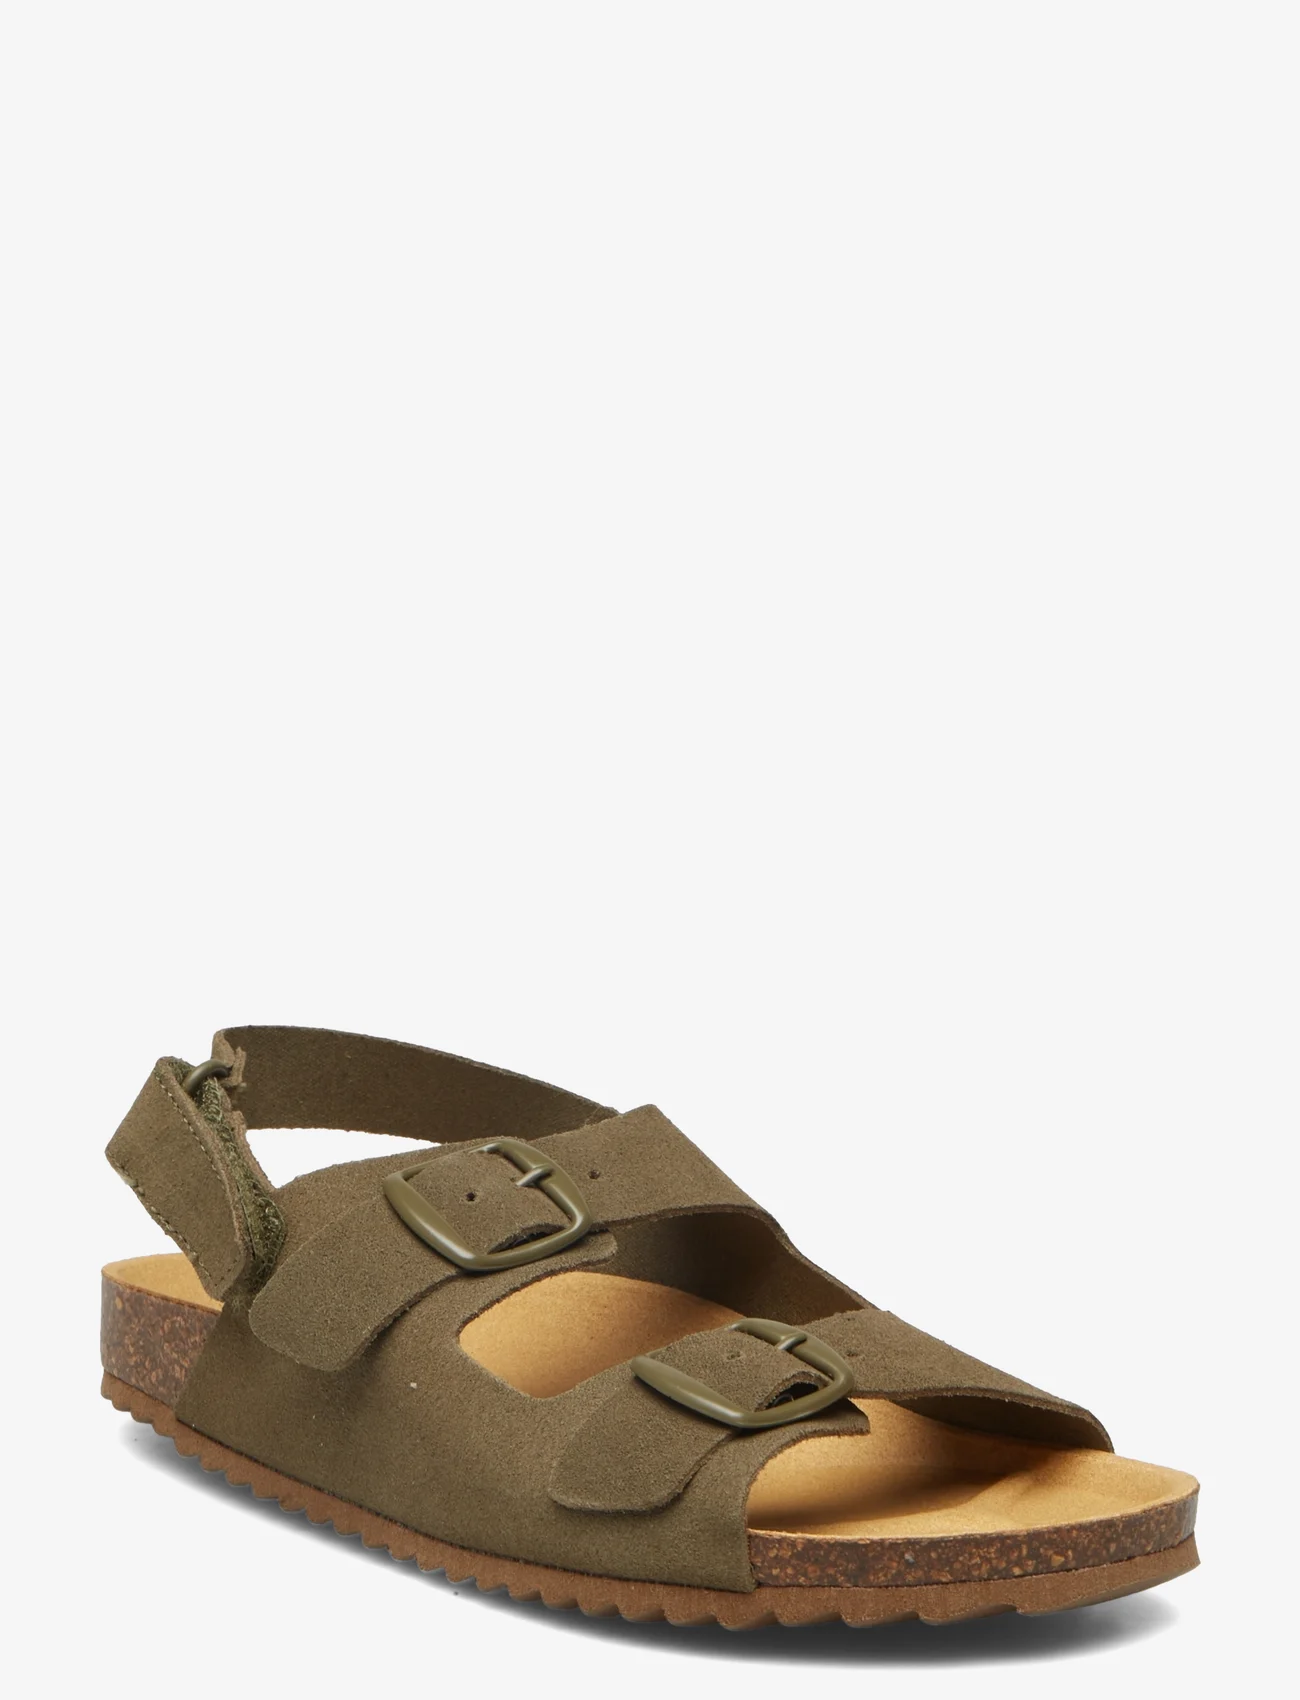 Mango - Buckle leather sandals - gode sommertilbud - beige - khaki - 0